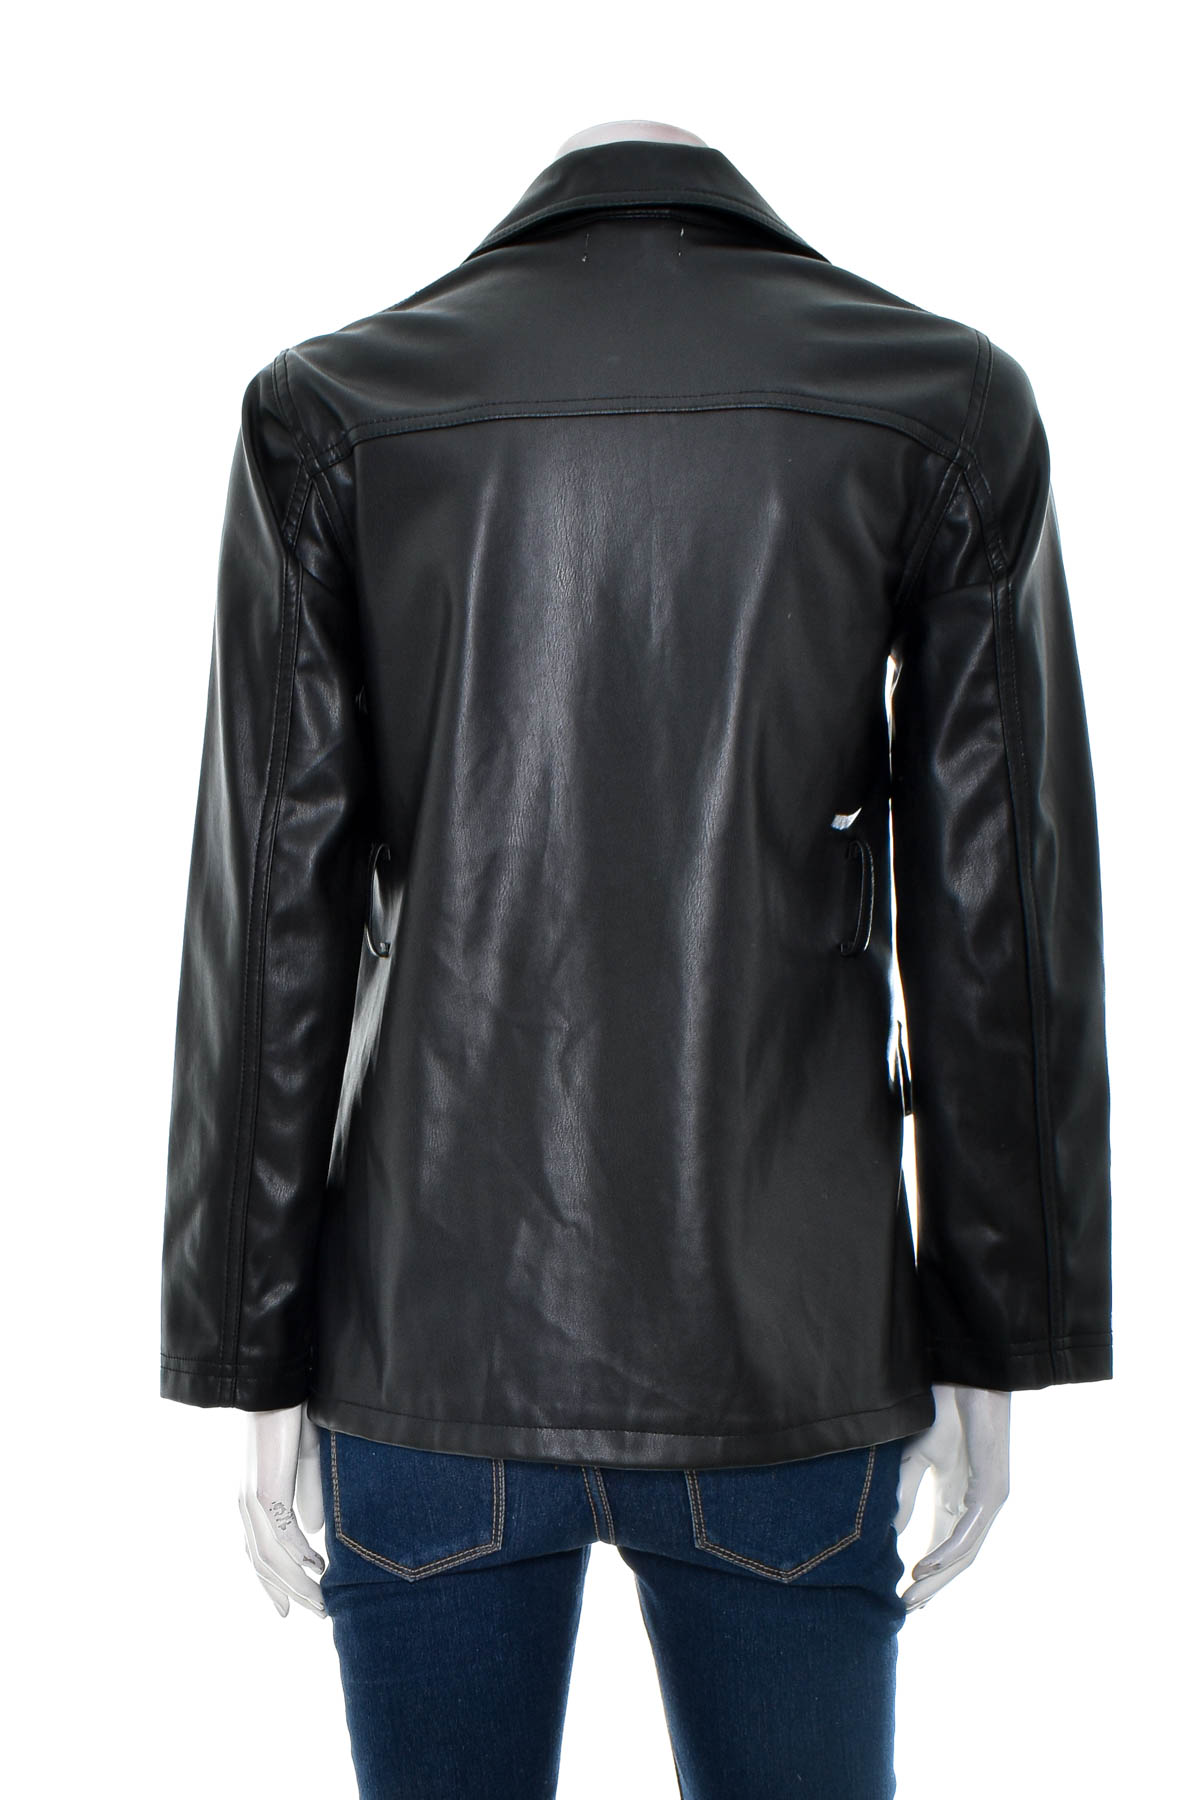 Women's leather jacket - Topshop - 1